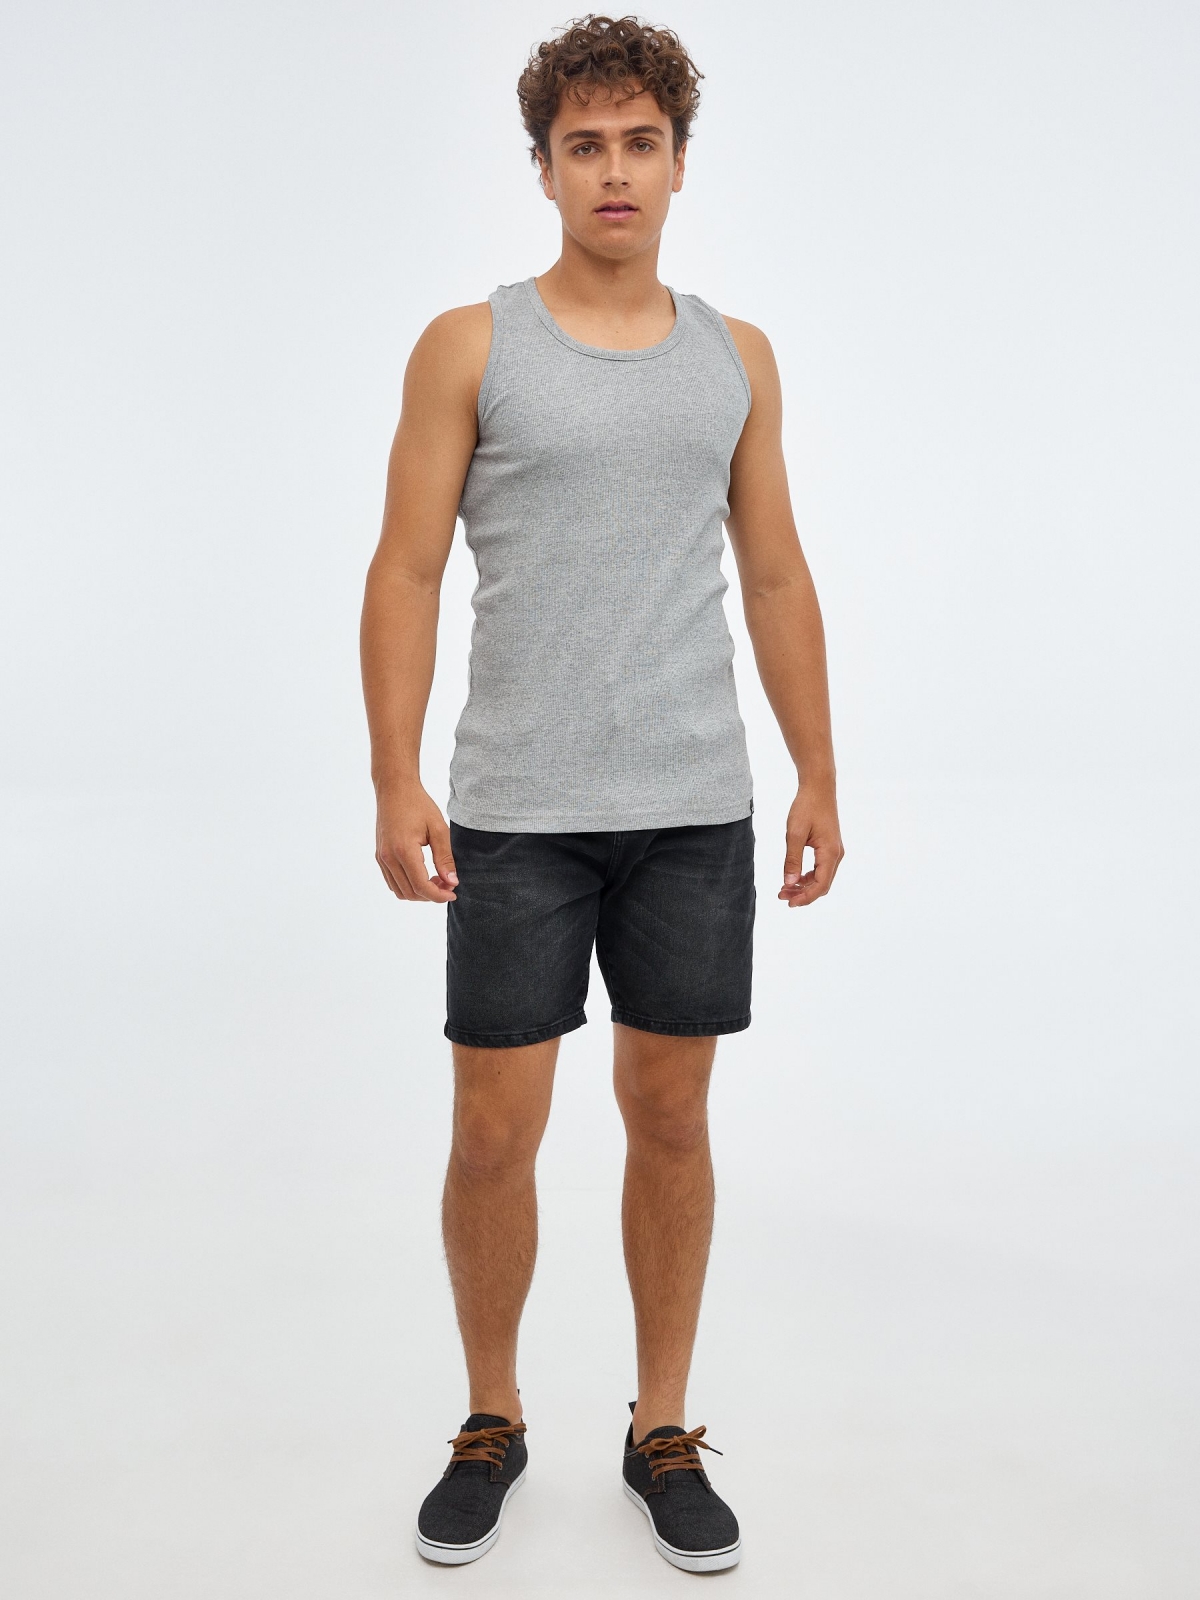 T-shirt básica com nas costas nadadora cinza vista geral frontal